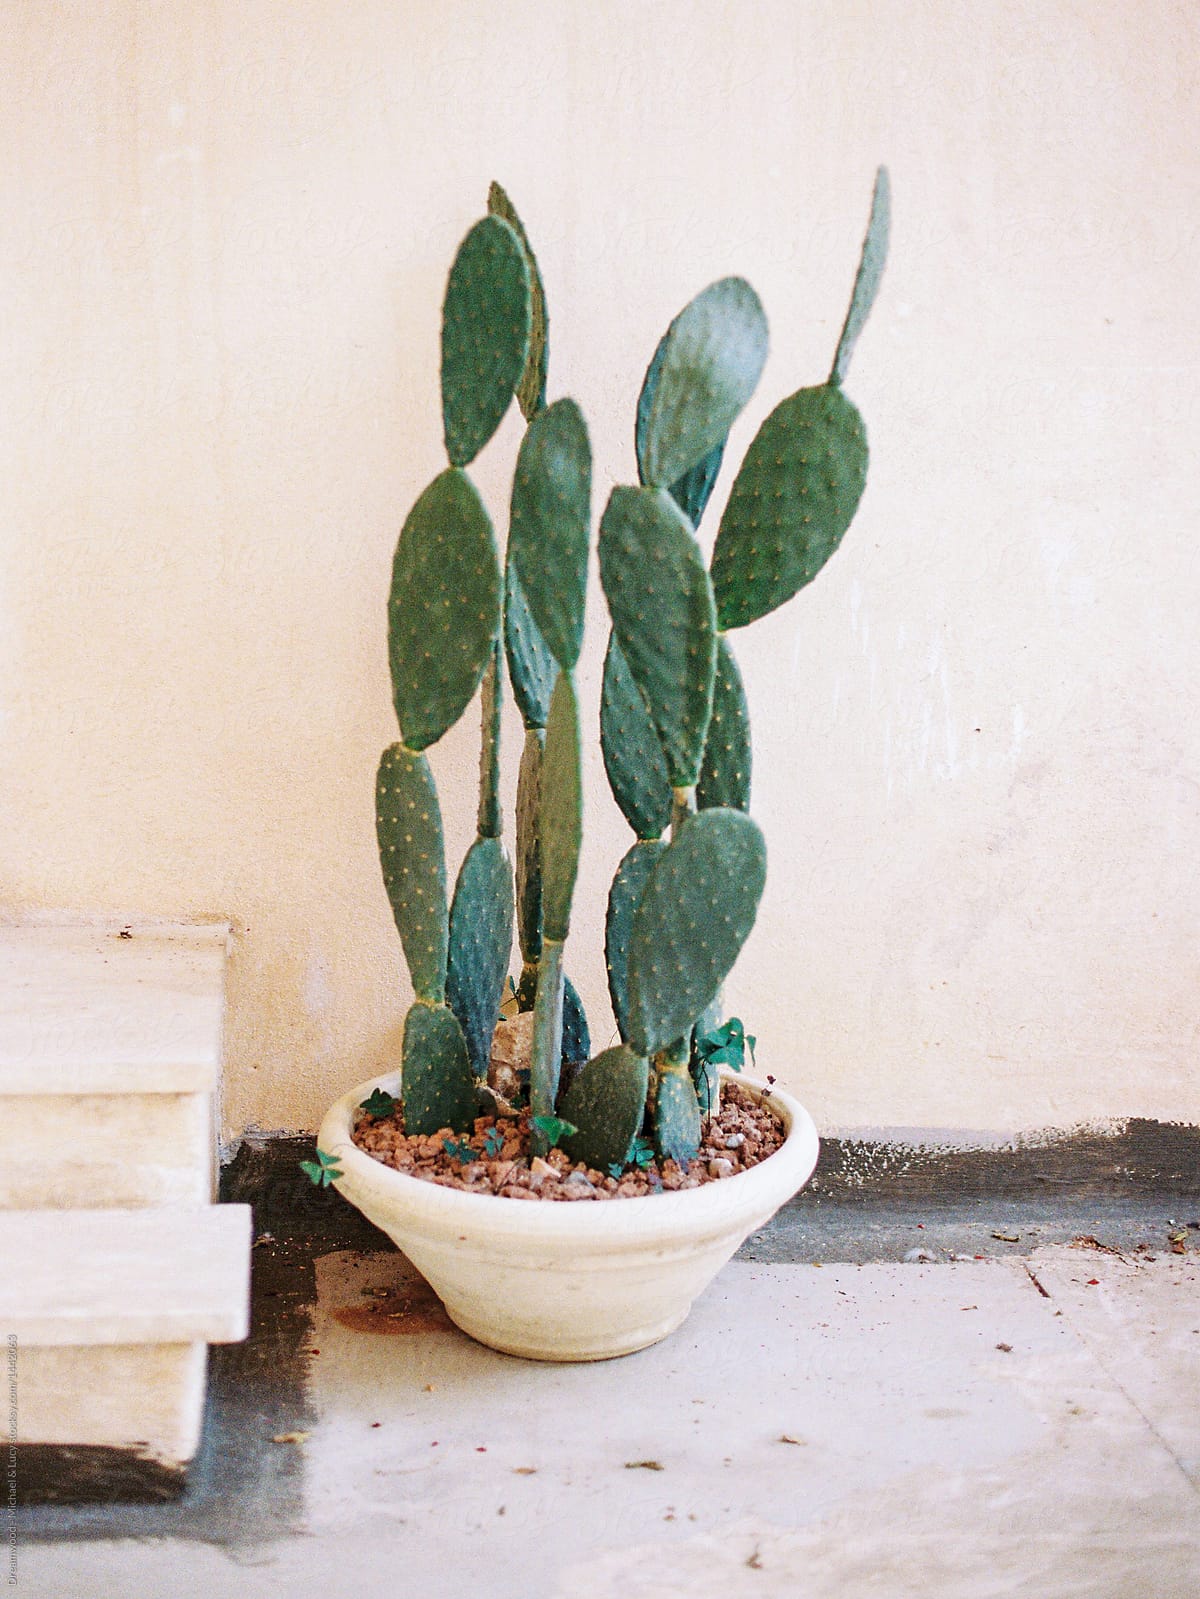 Cactus in pot on street